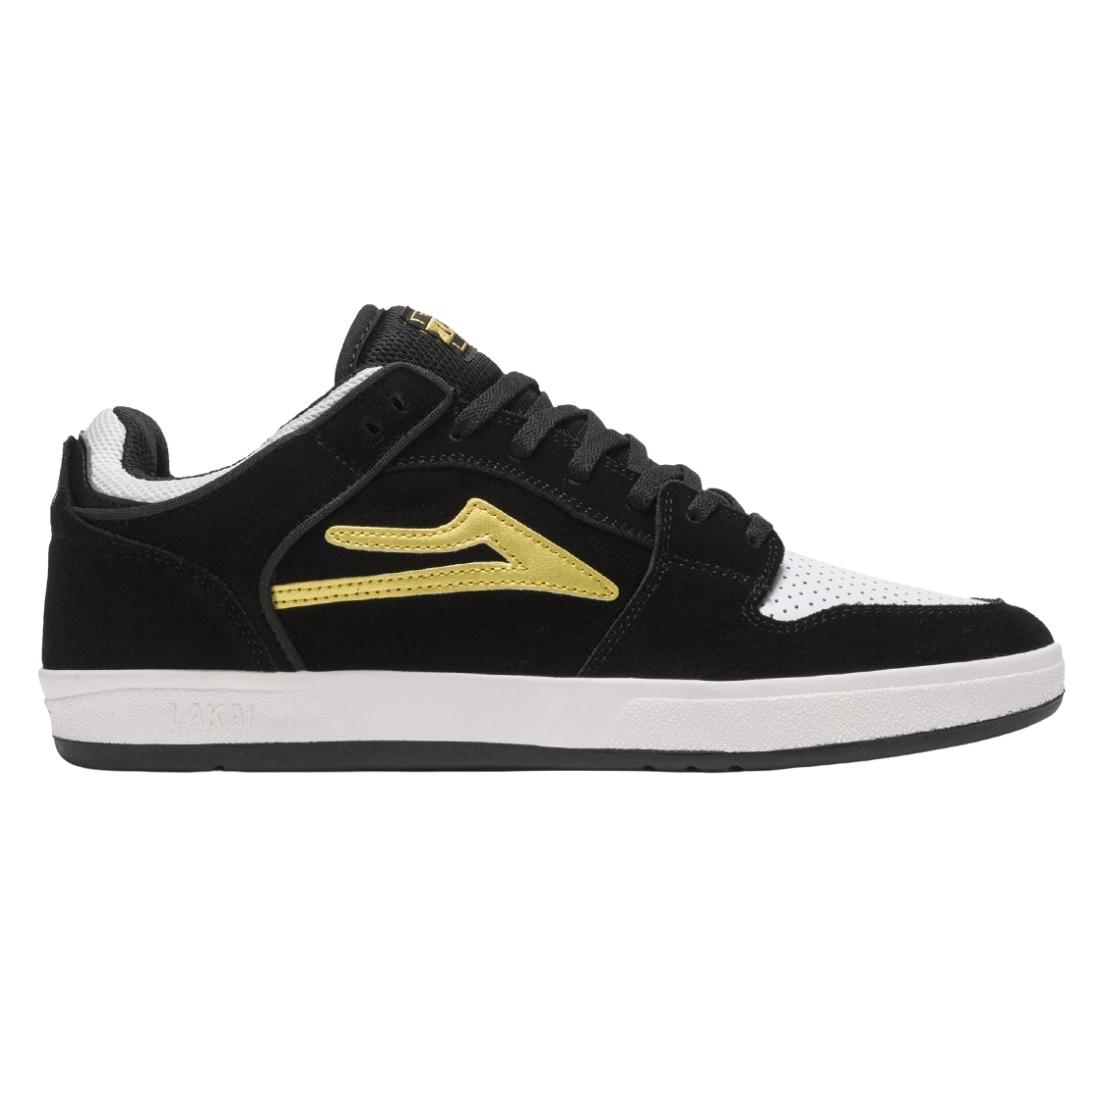 Lakai Telford Low Skate Shoes - Black/Gold Suede - Mens Skate Shoes by Lakai